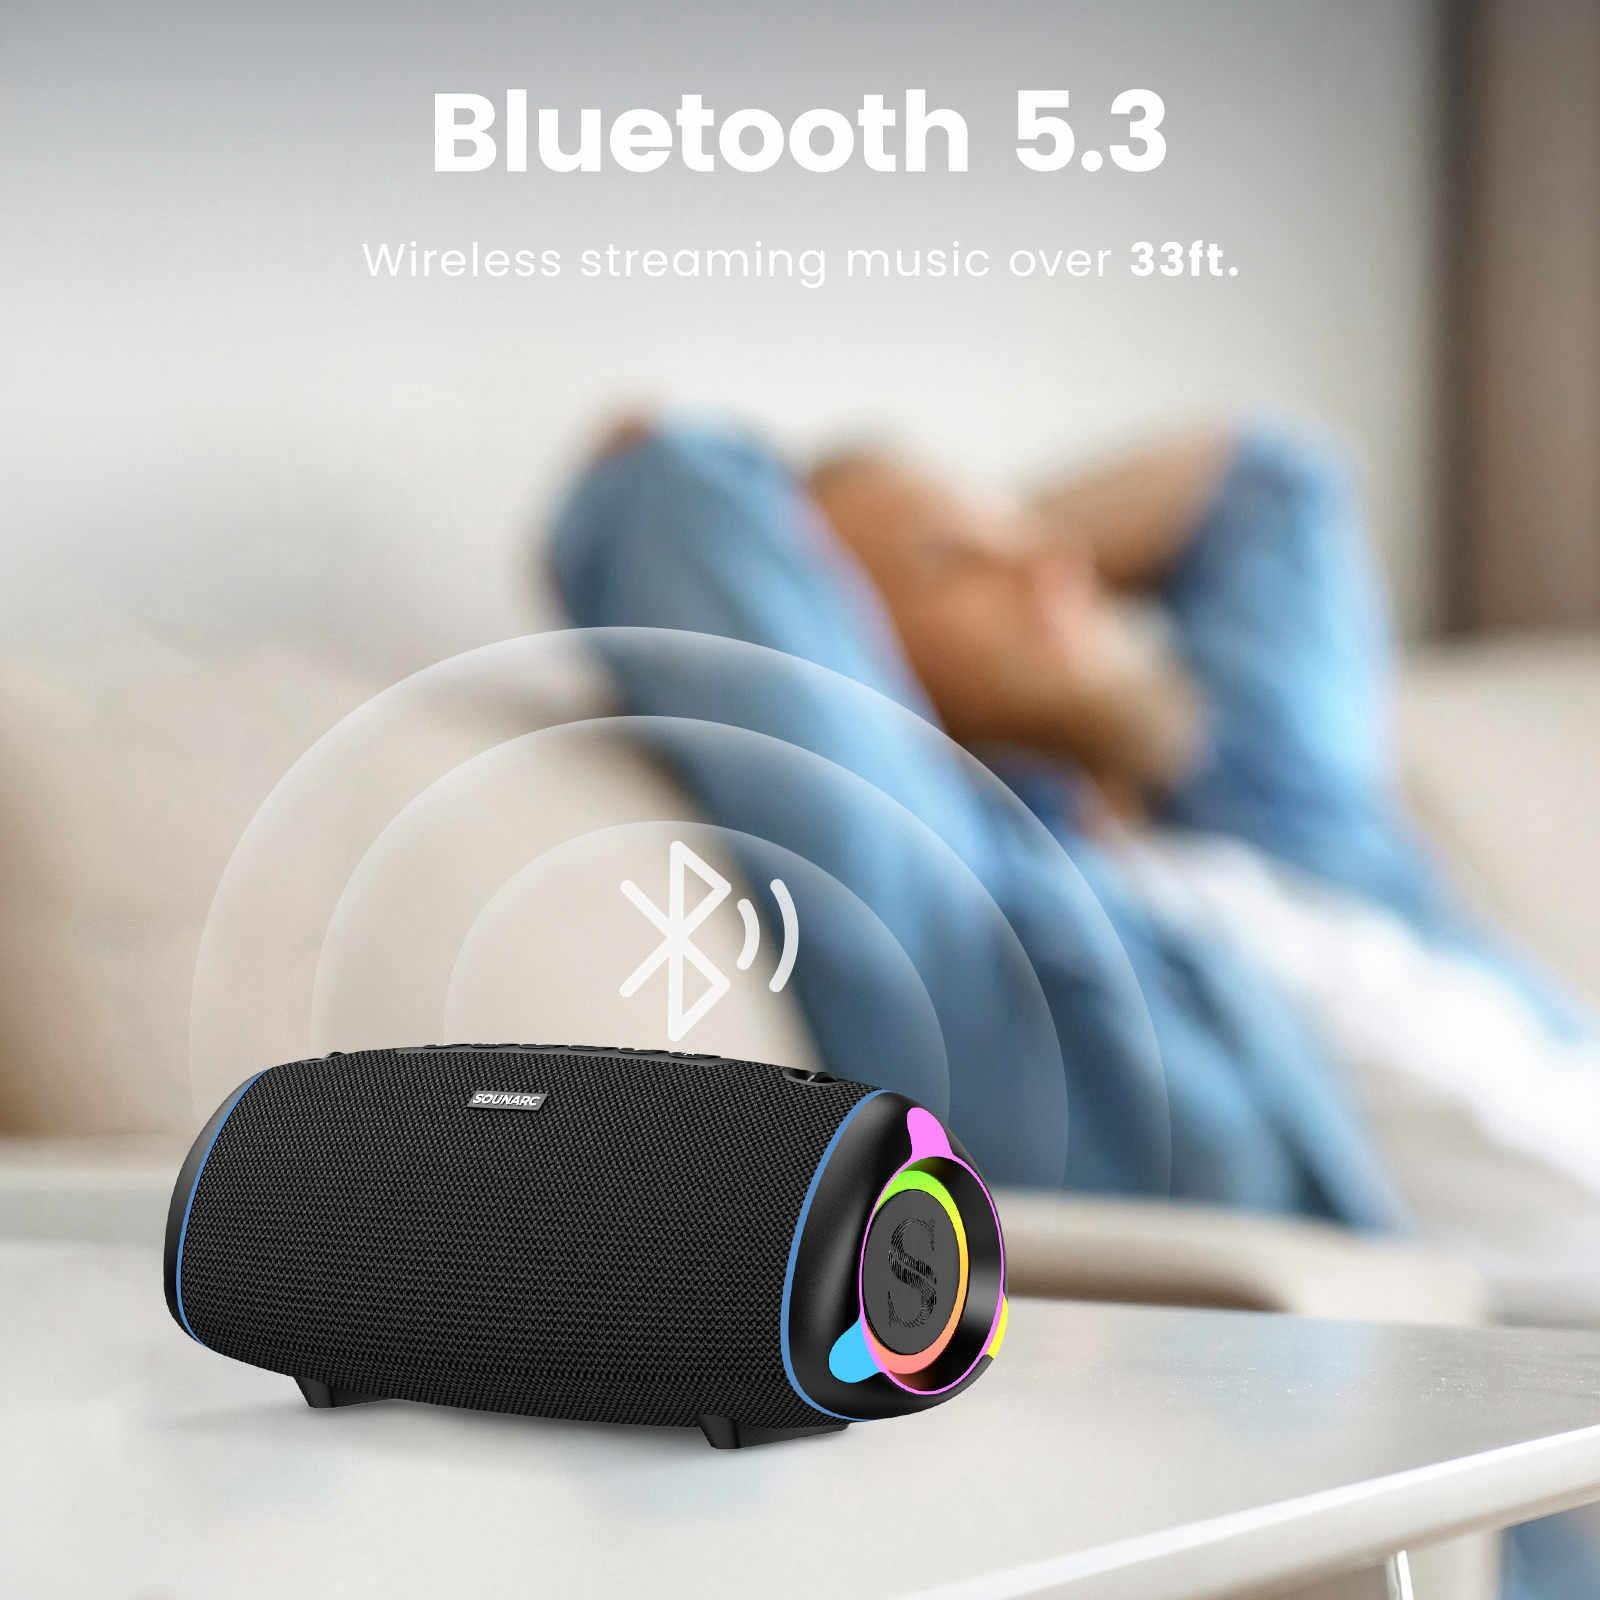 Sounarc R2 Portable Bluetooth Speaker - Black